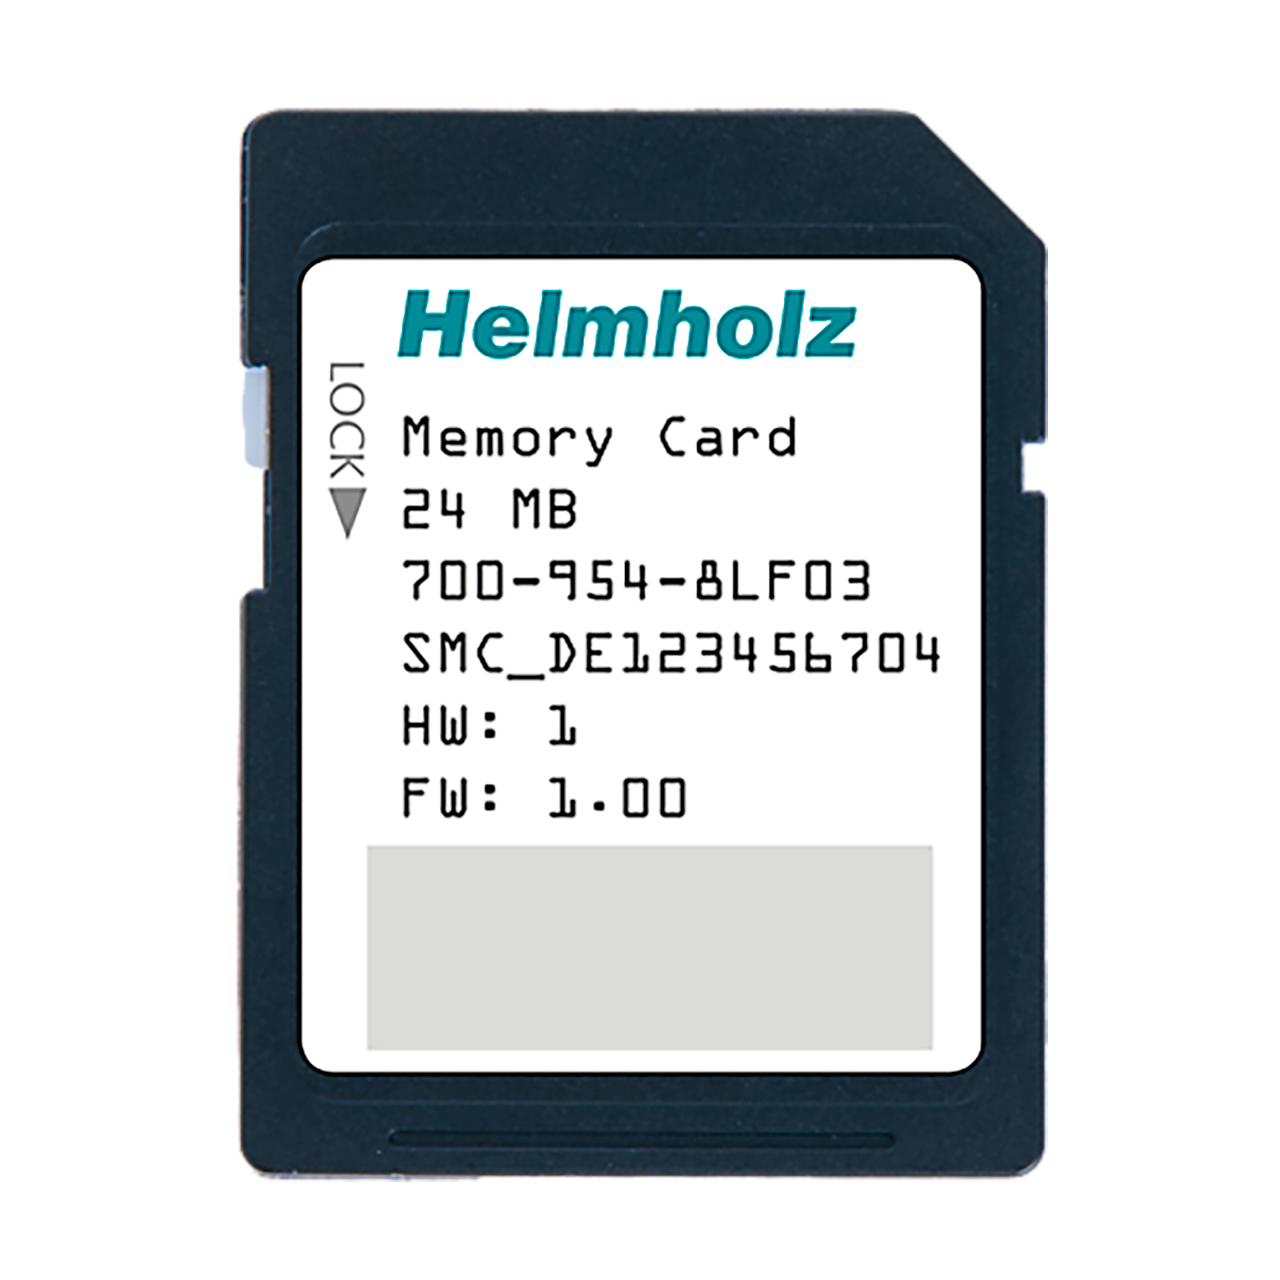 Helmholz Tarjeta de Memoria para S7-1200 / S7-1500, 24 MByte 700-954-8LF03